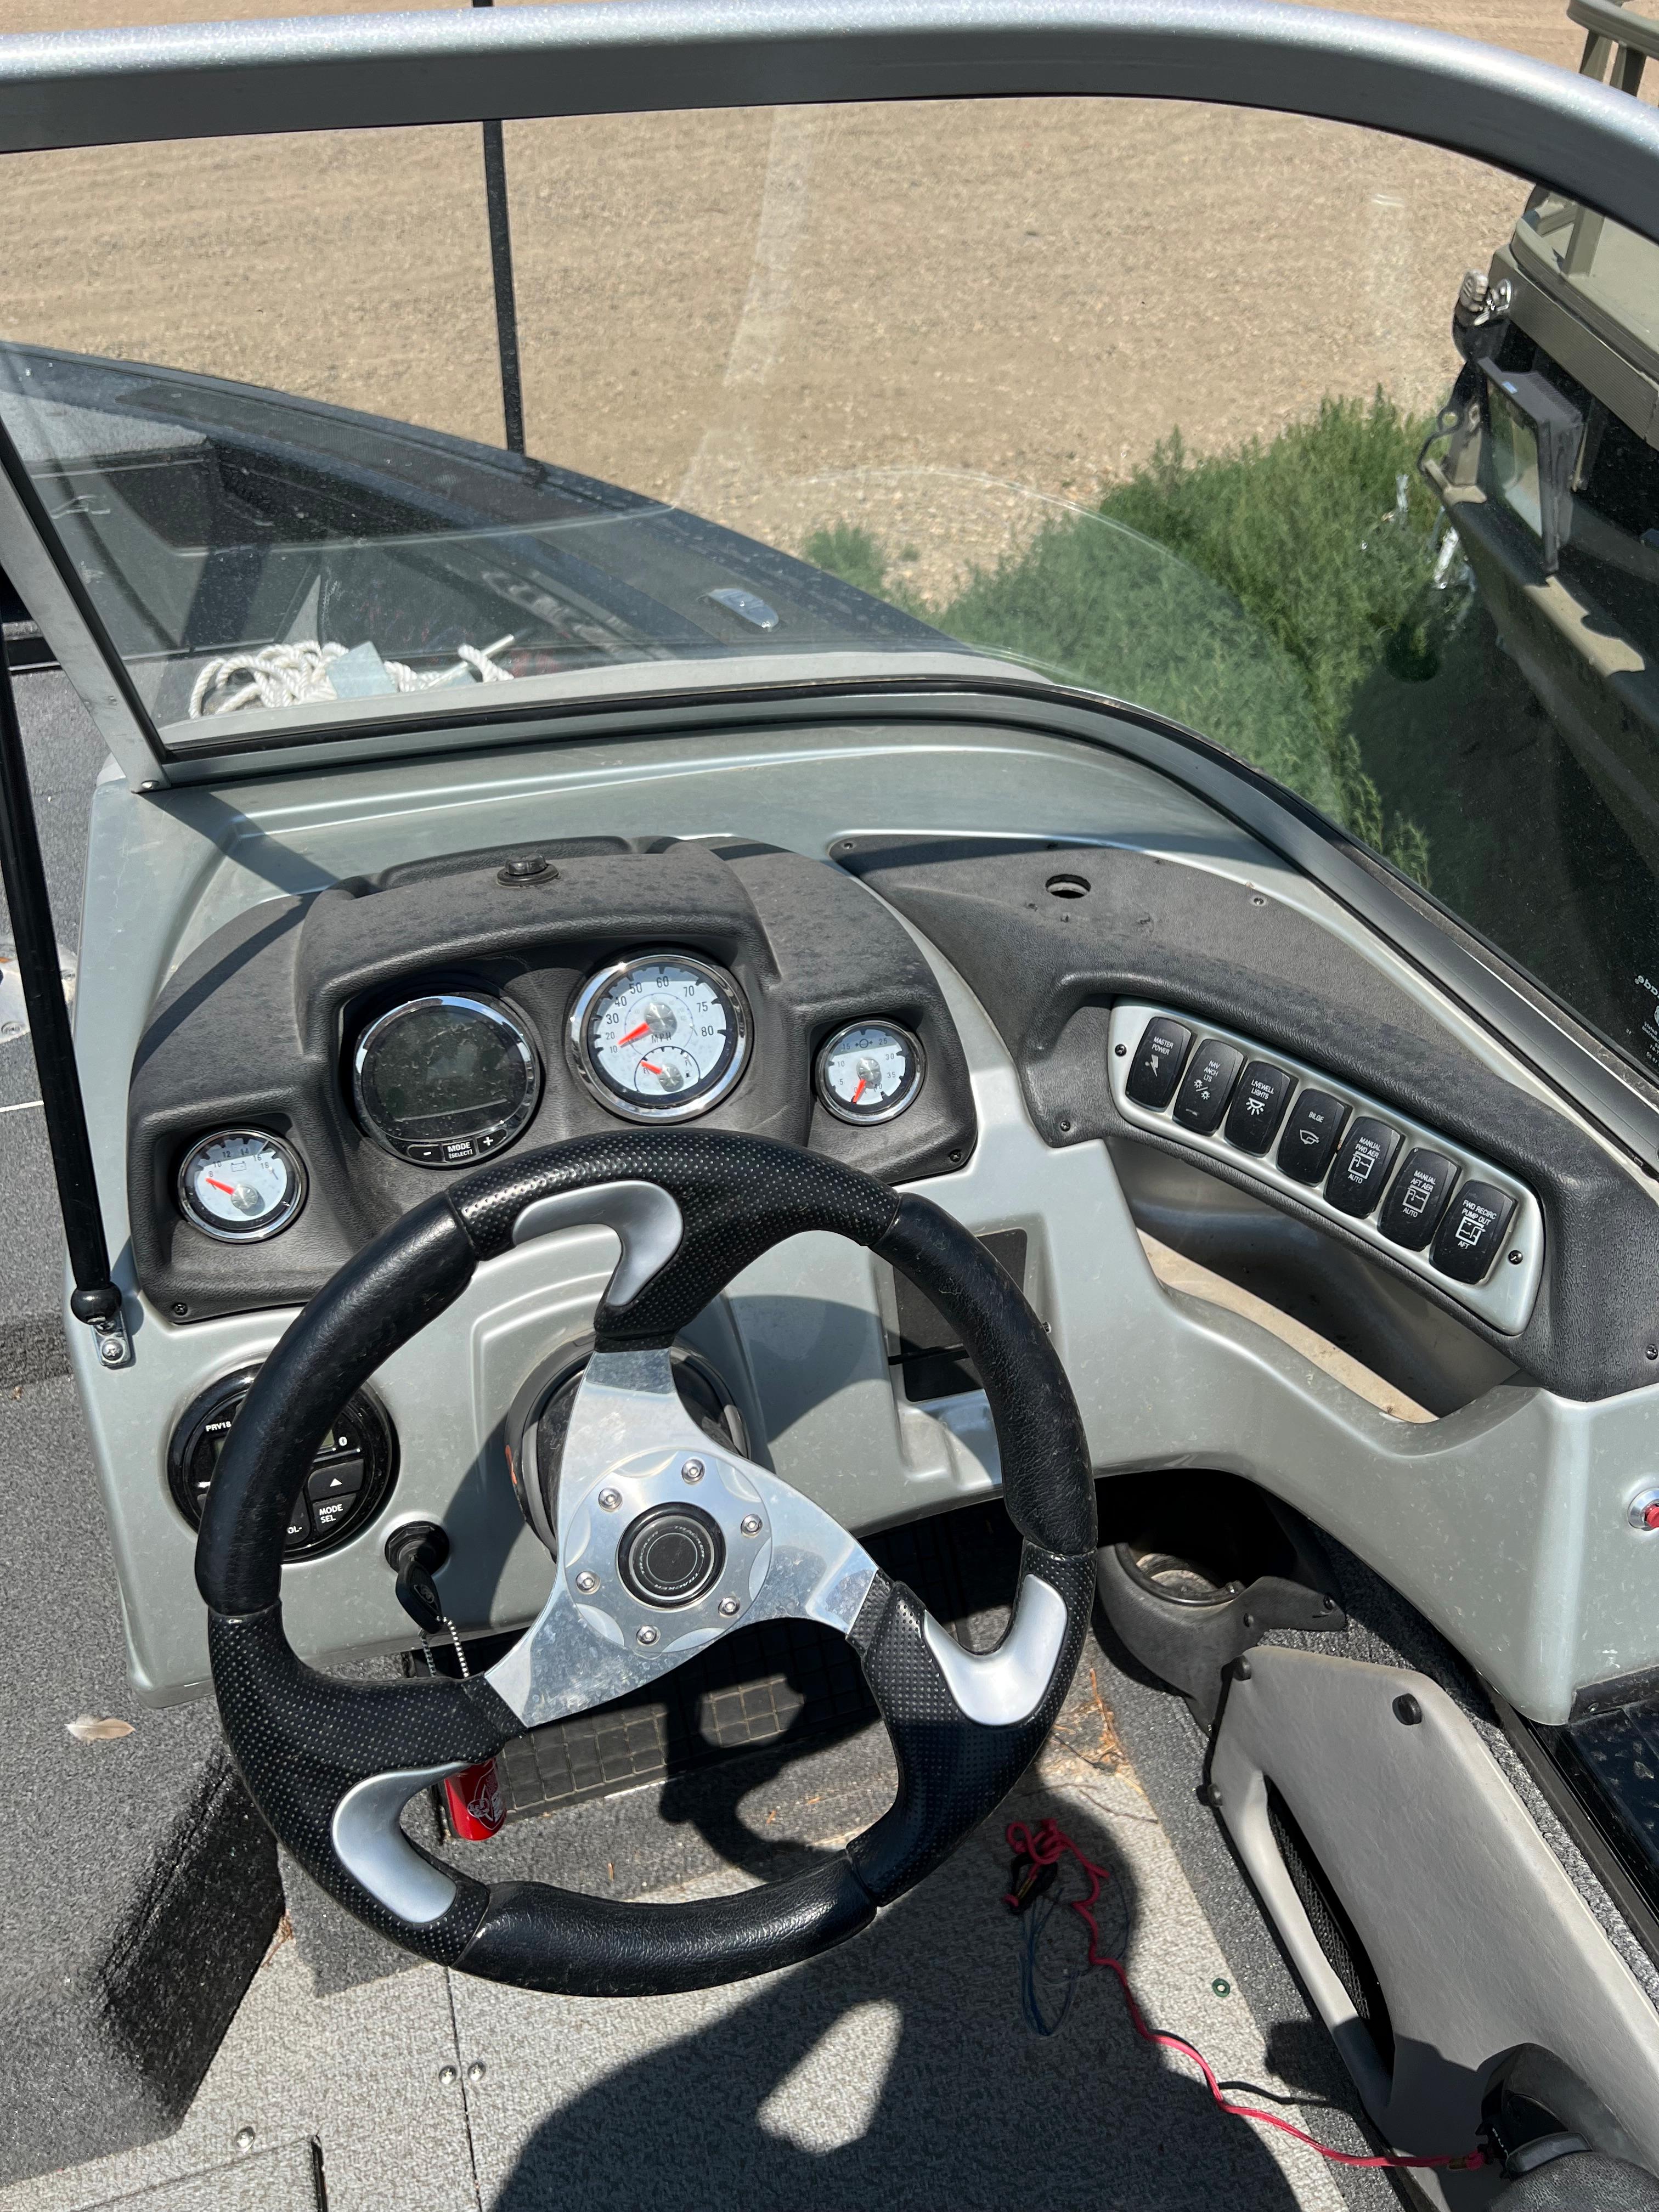 2018 Tracker Targa V-19 WT